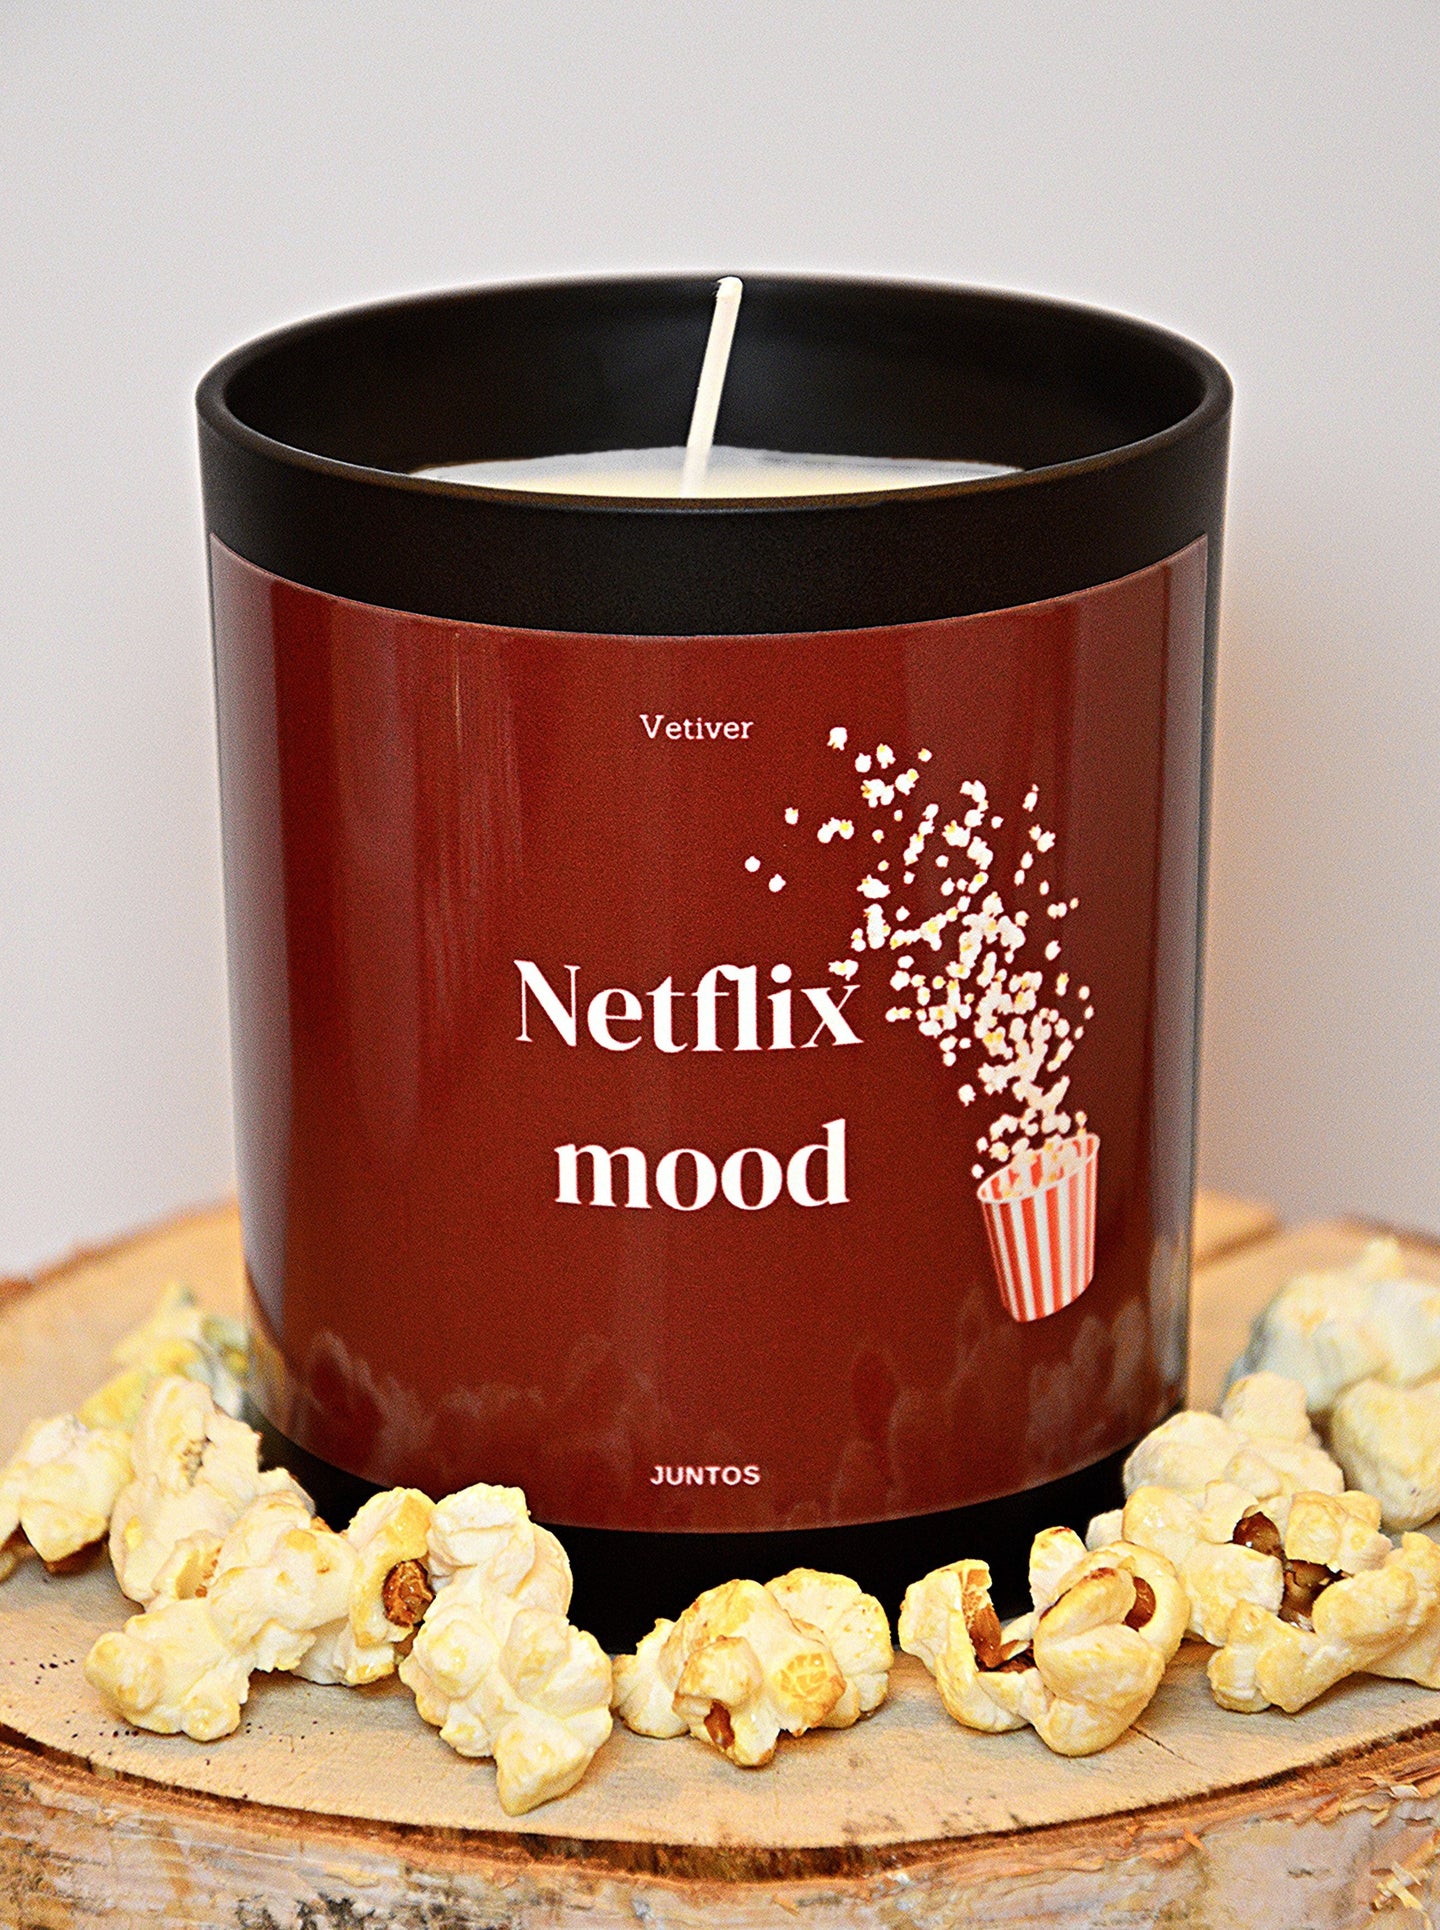 Bougie parfumée – Netflix mood – Pot réutilisable